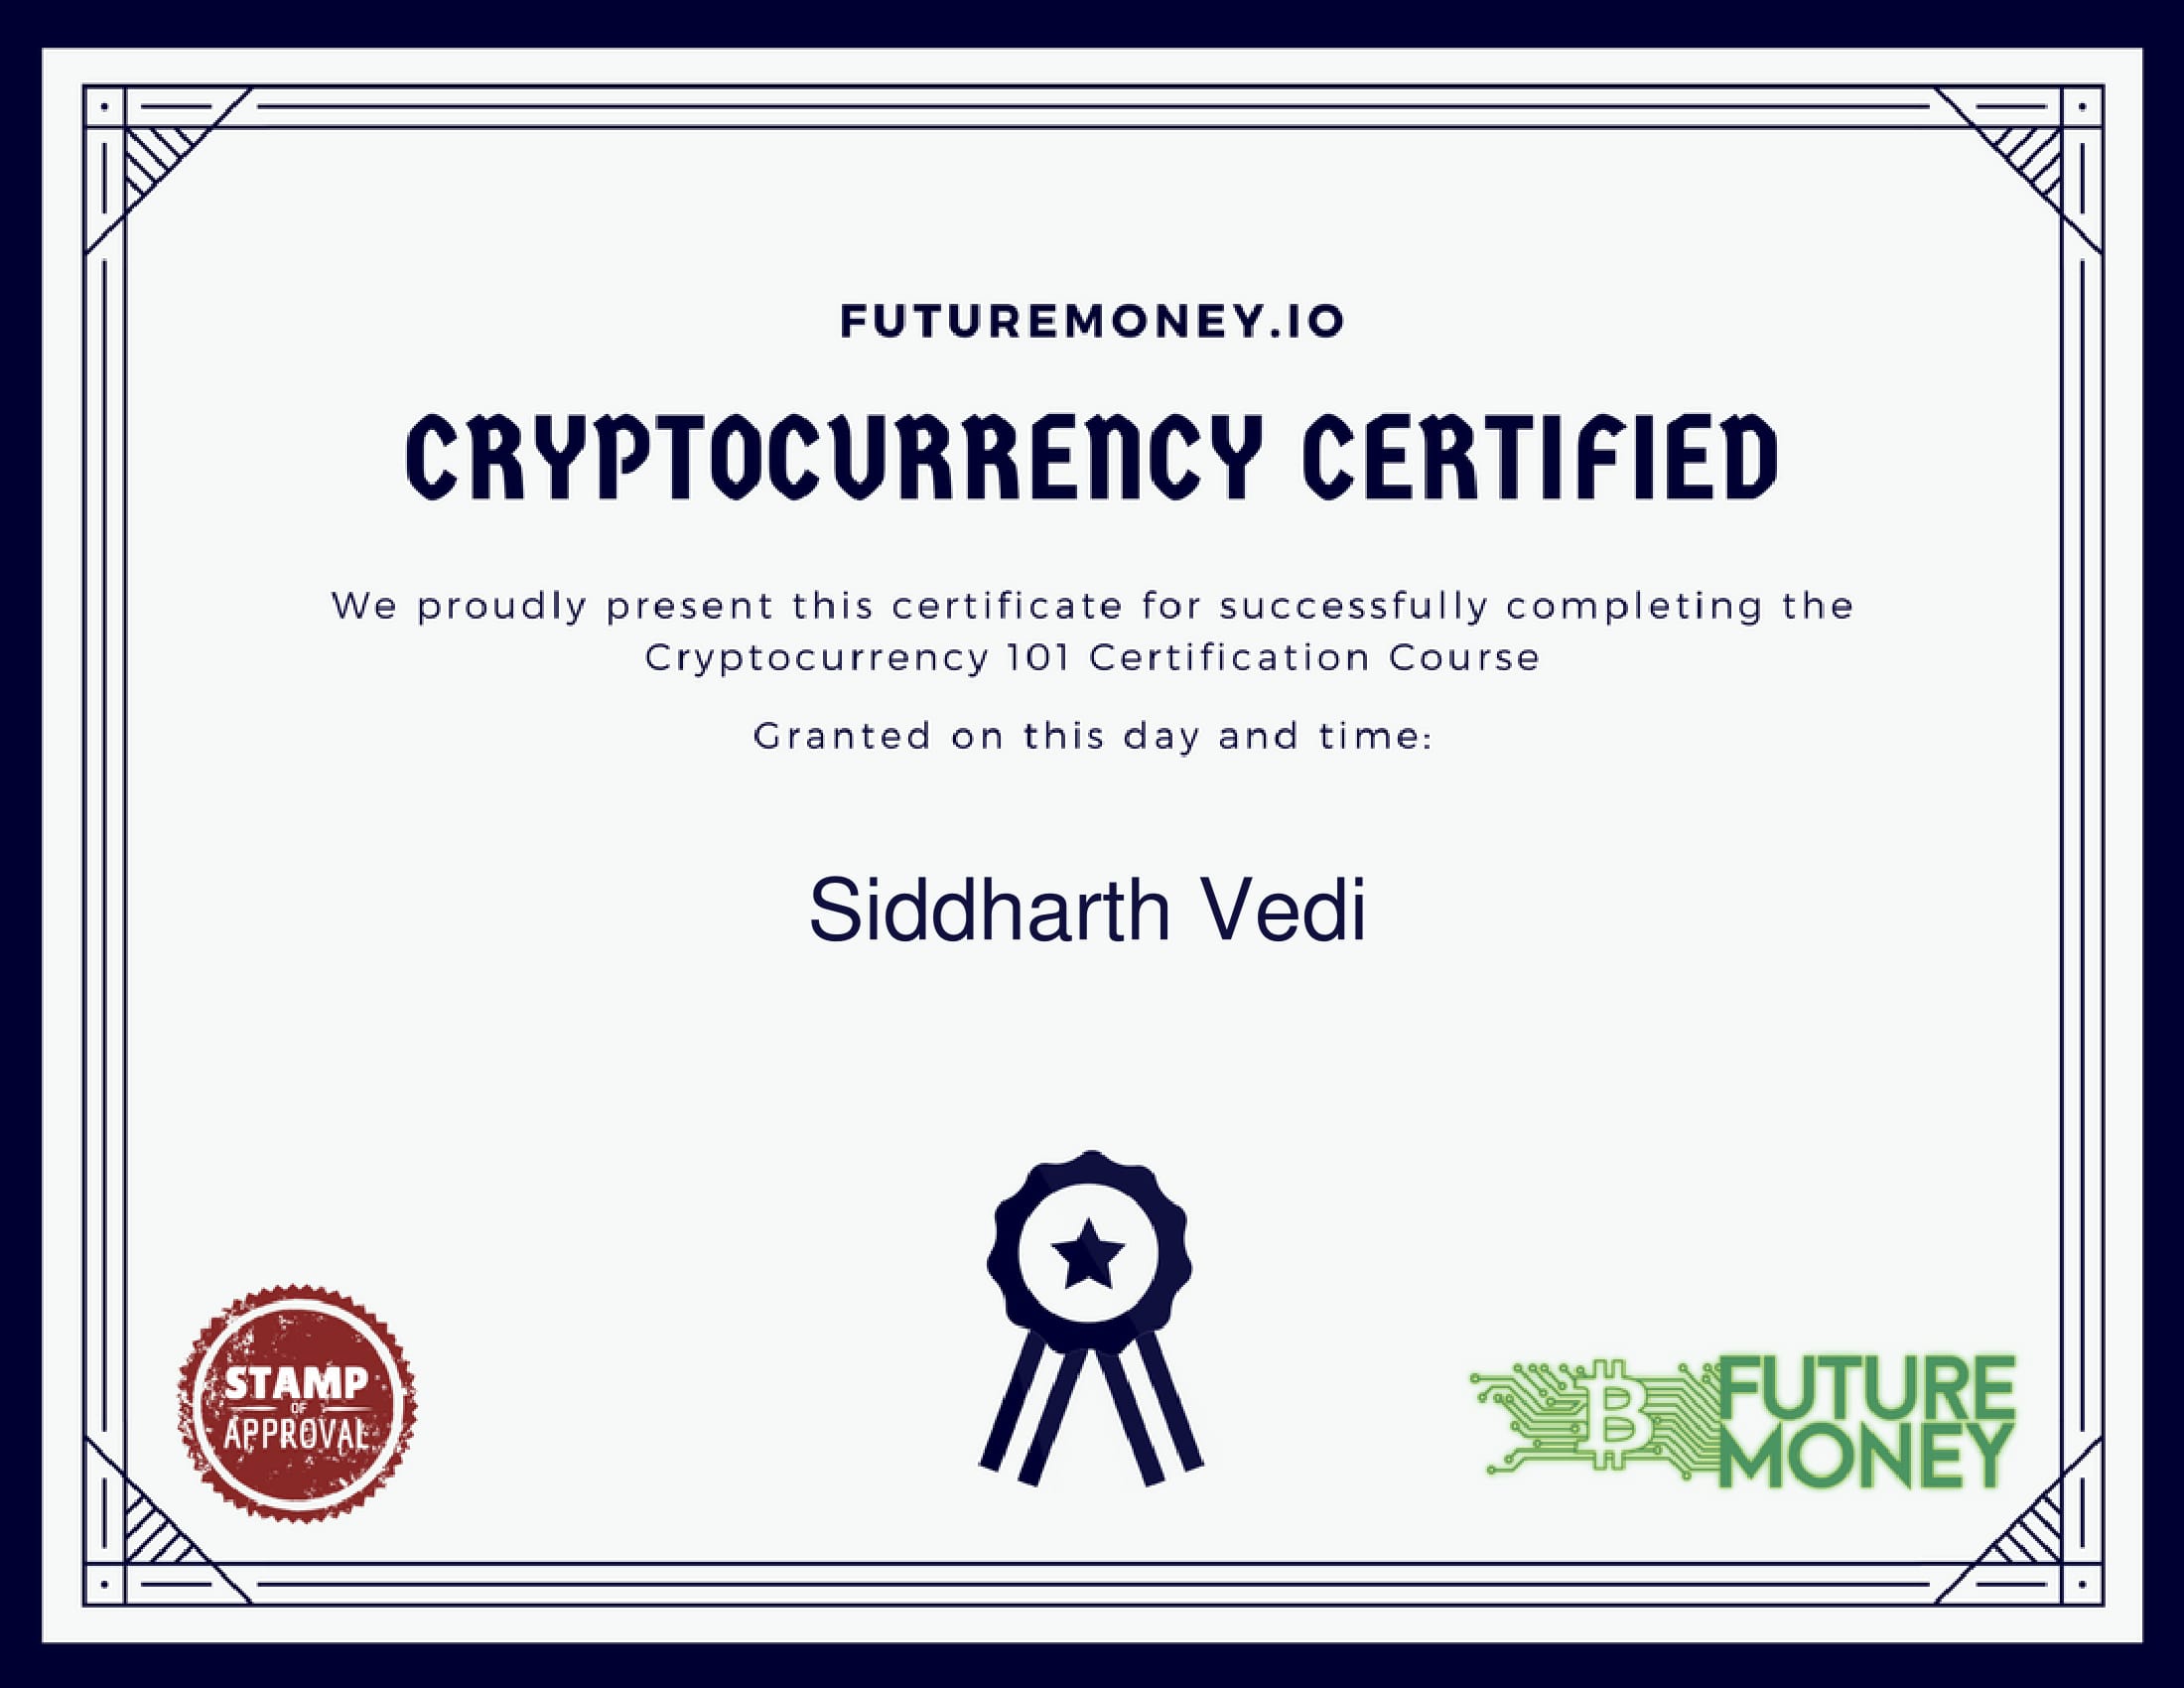 certified bitcoin professional exam